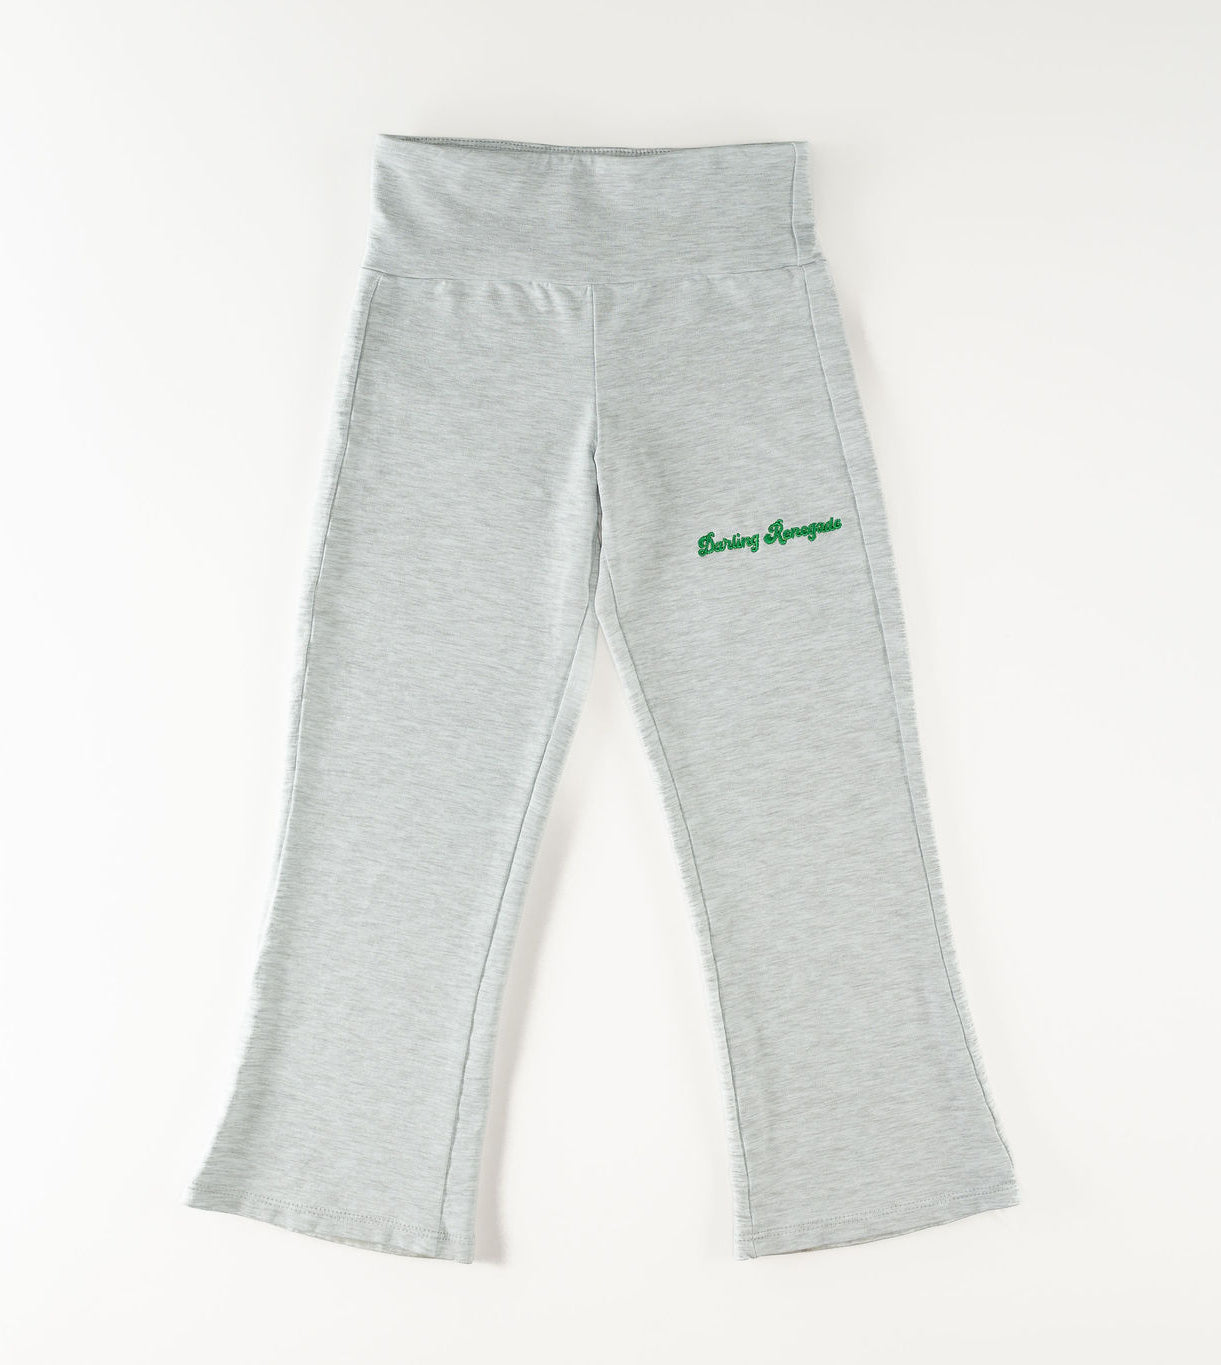 Signature Sweatpants in Gray/Green